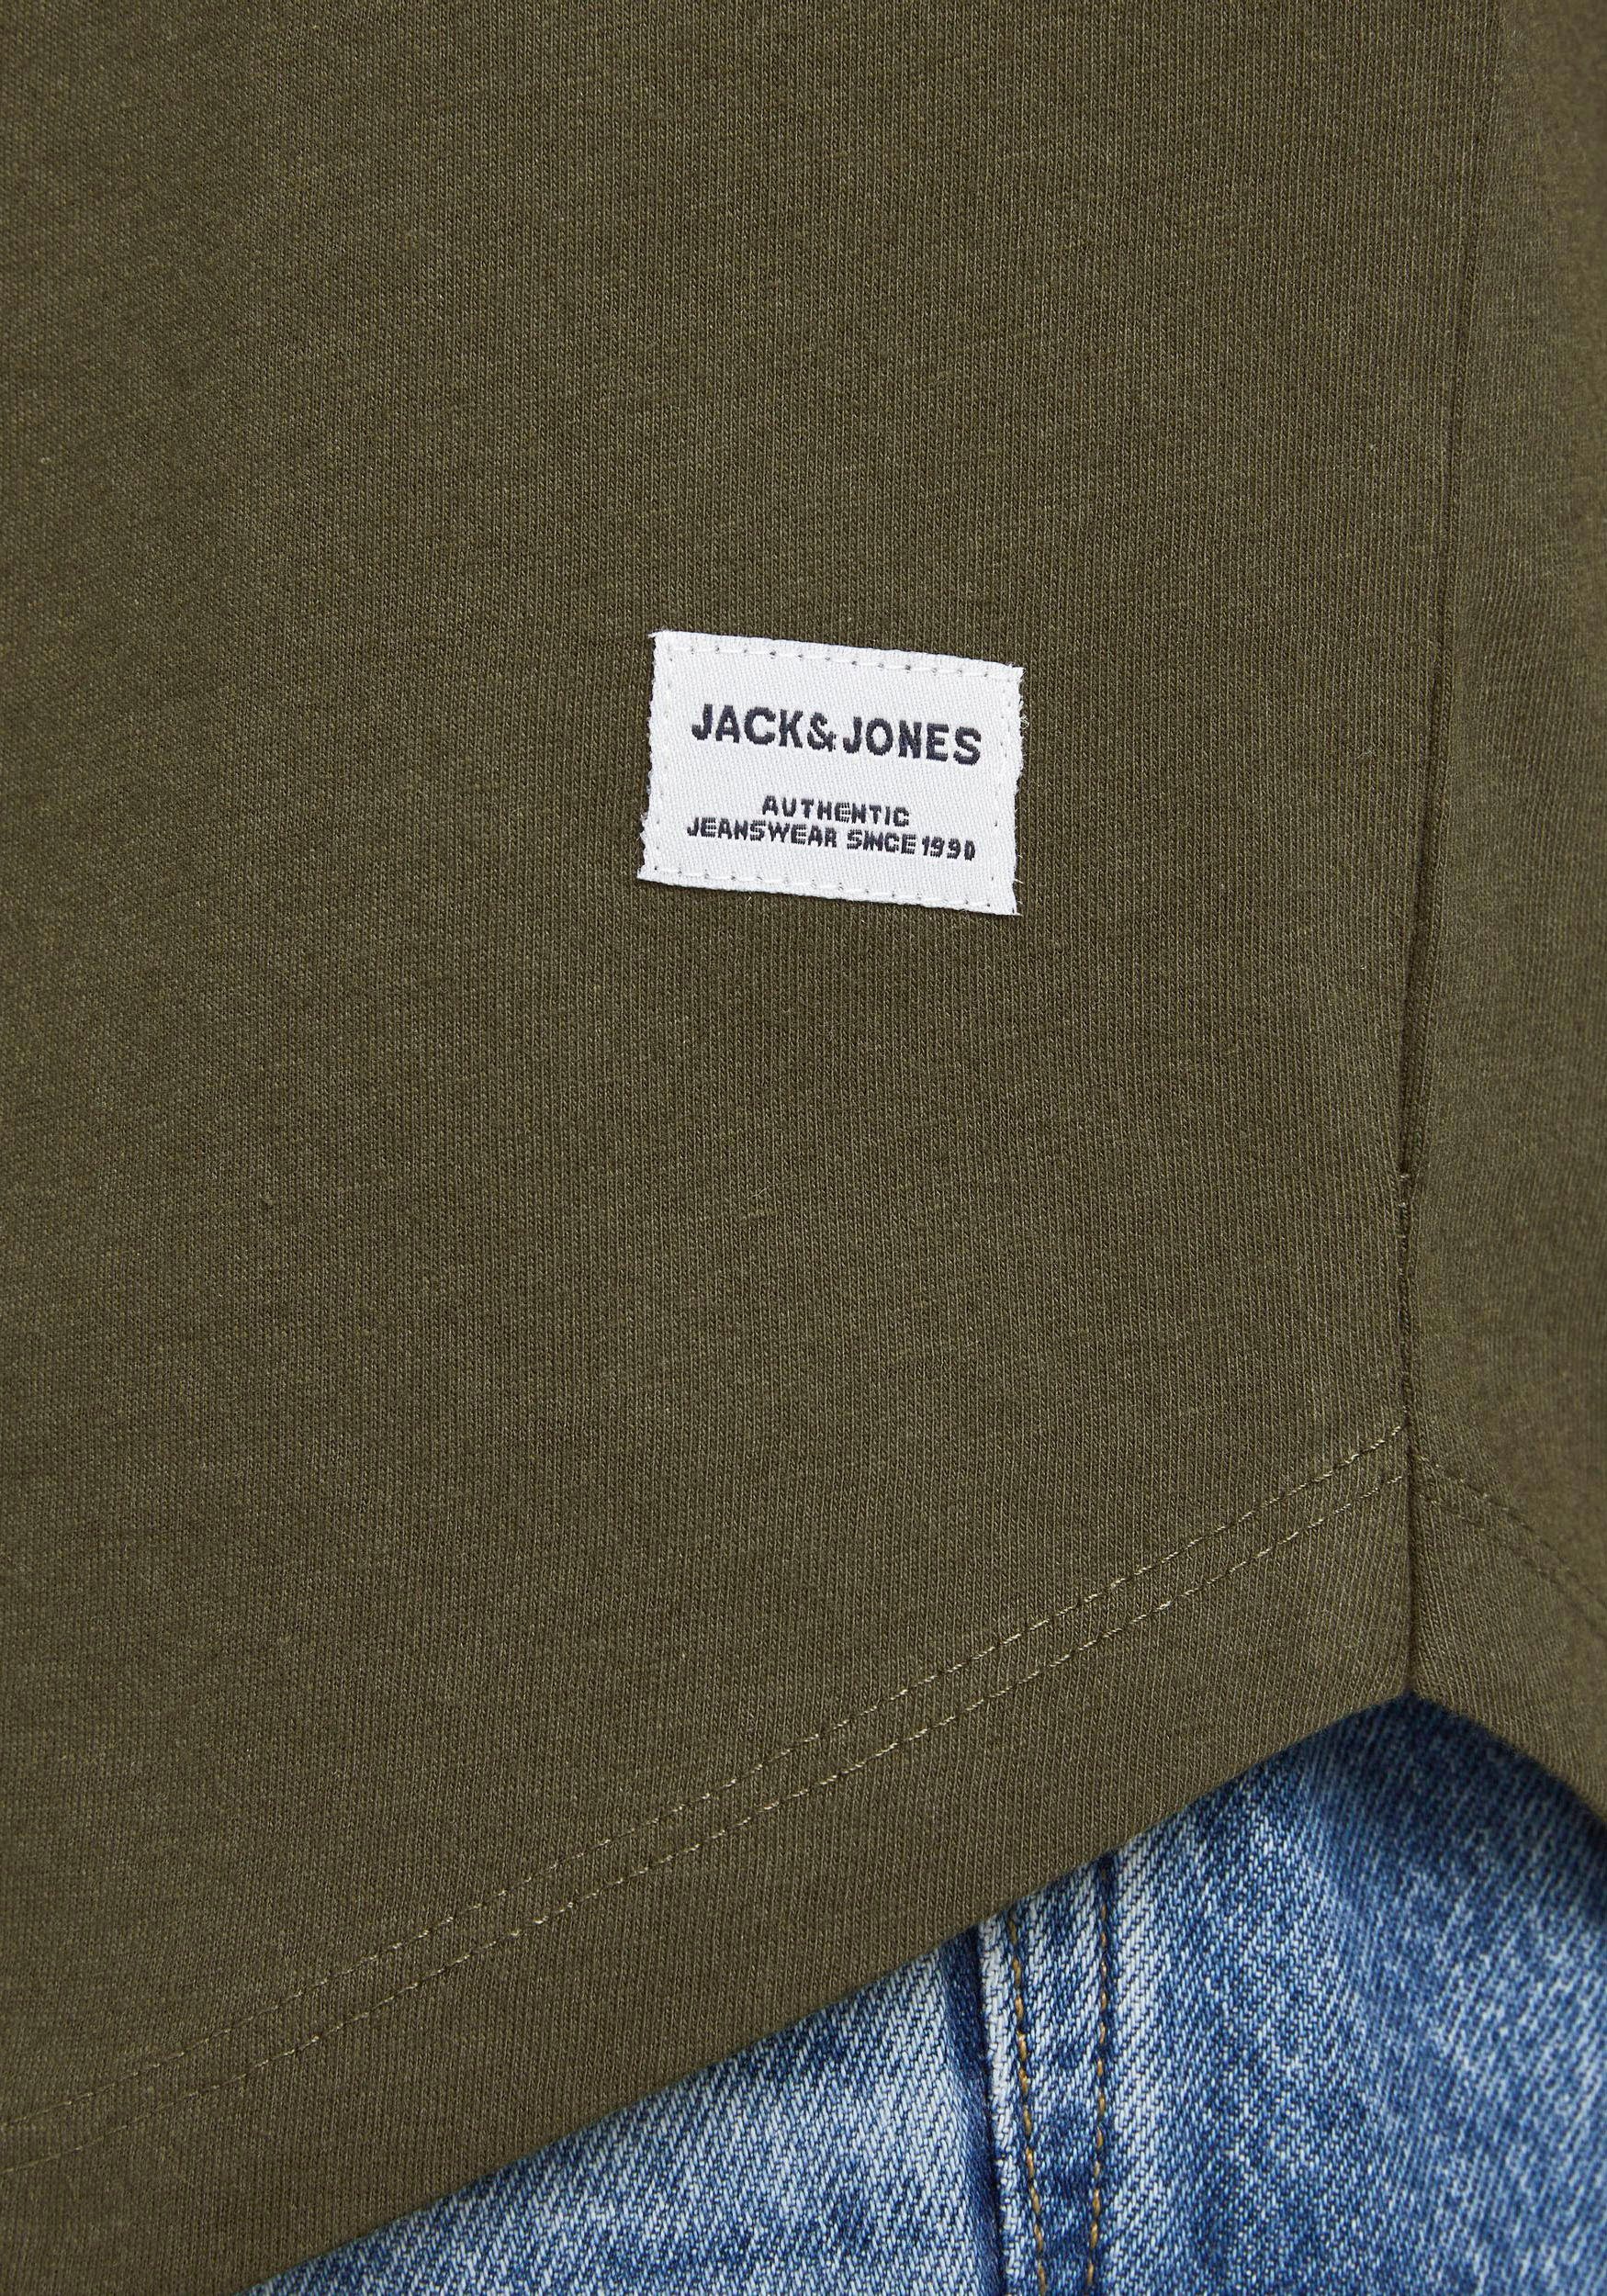 & Jones T-Shirt dunkelgrün NOA TEE Jack